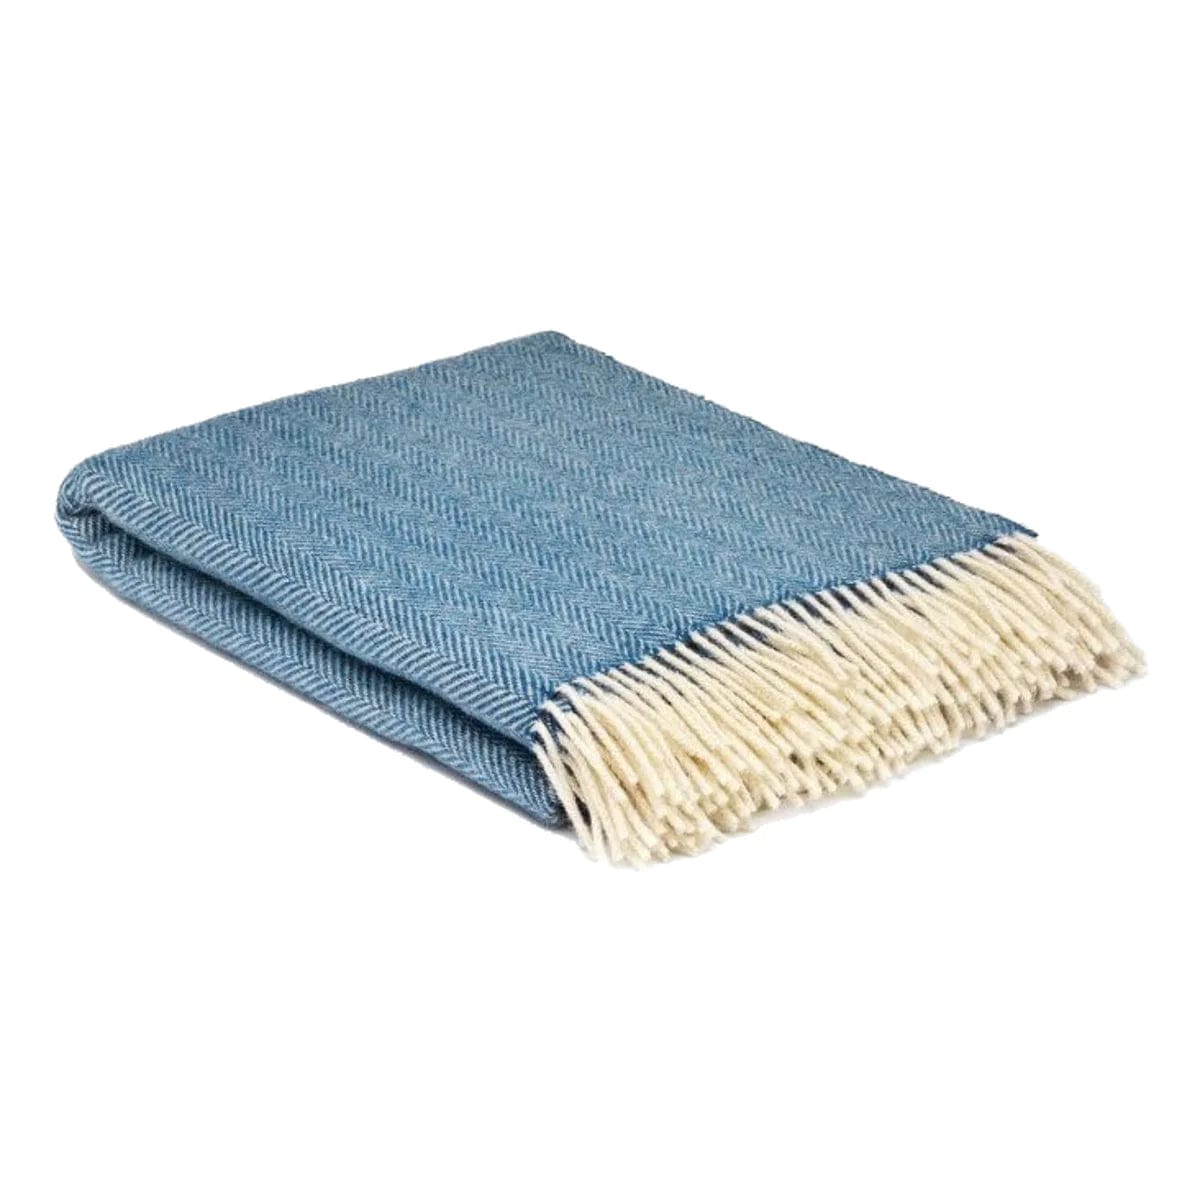 McNutt Blanket 100% Pure Wool Throw - Blue Sky Herringbone - McNutts of Donegal